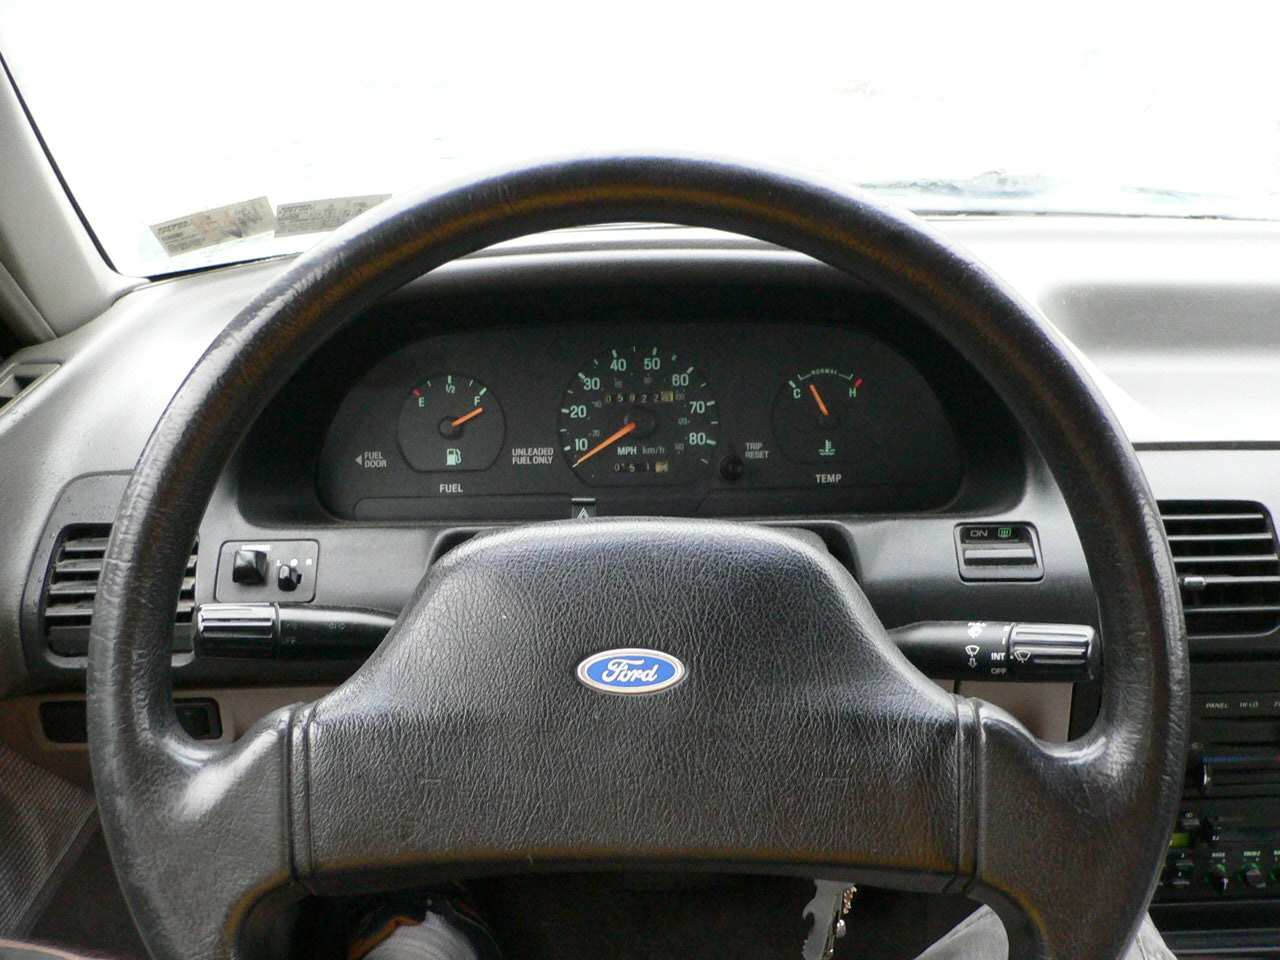 1991 Ford escort wagon specs #1